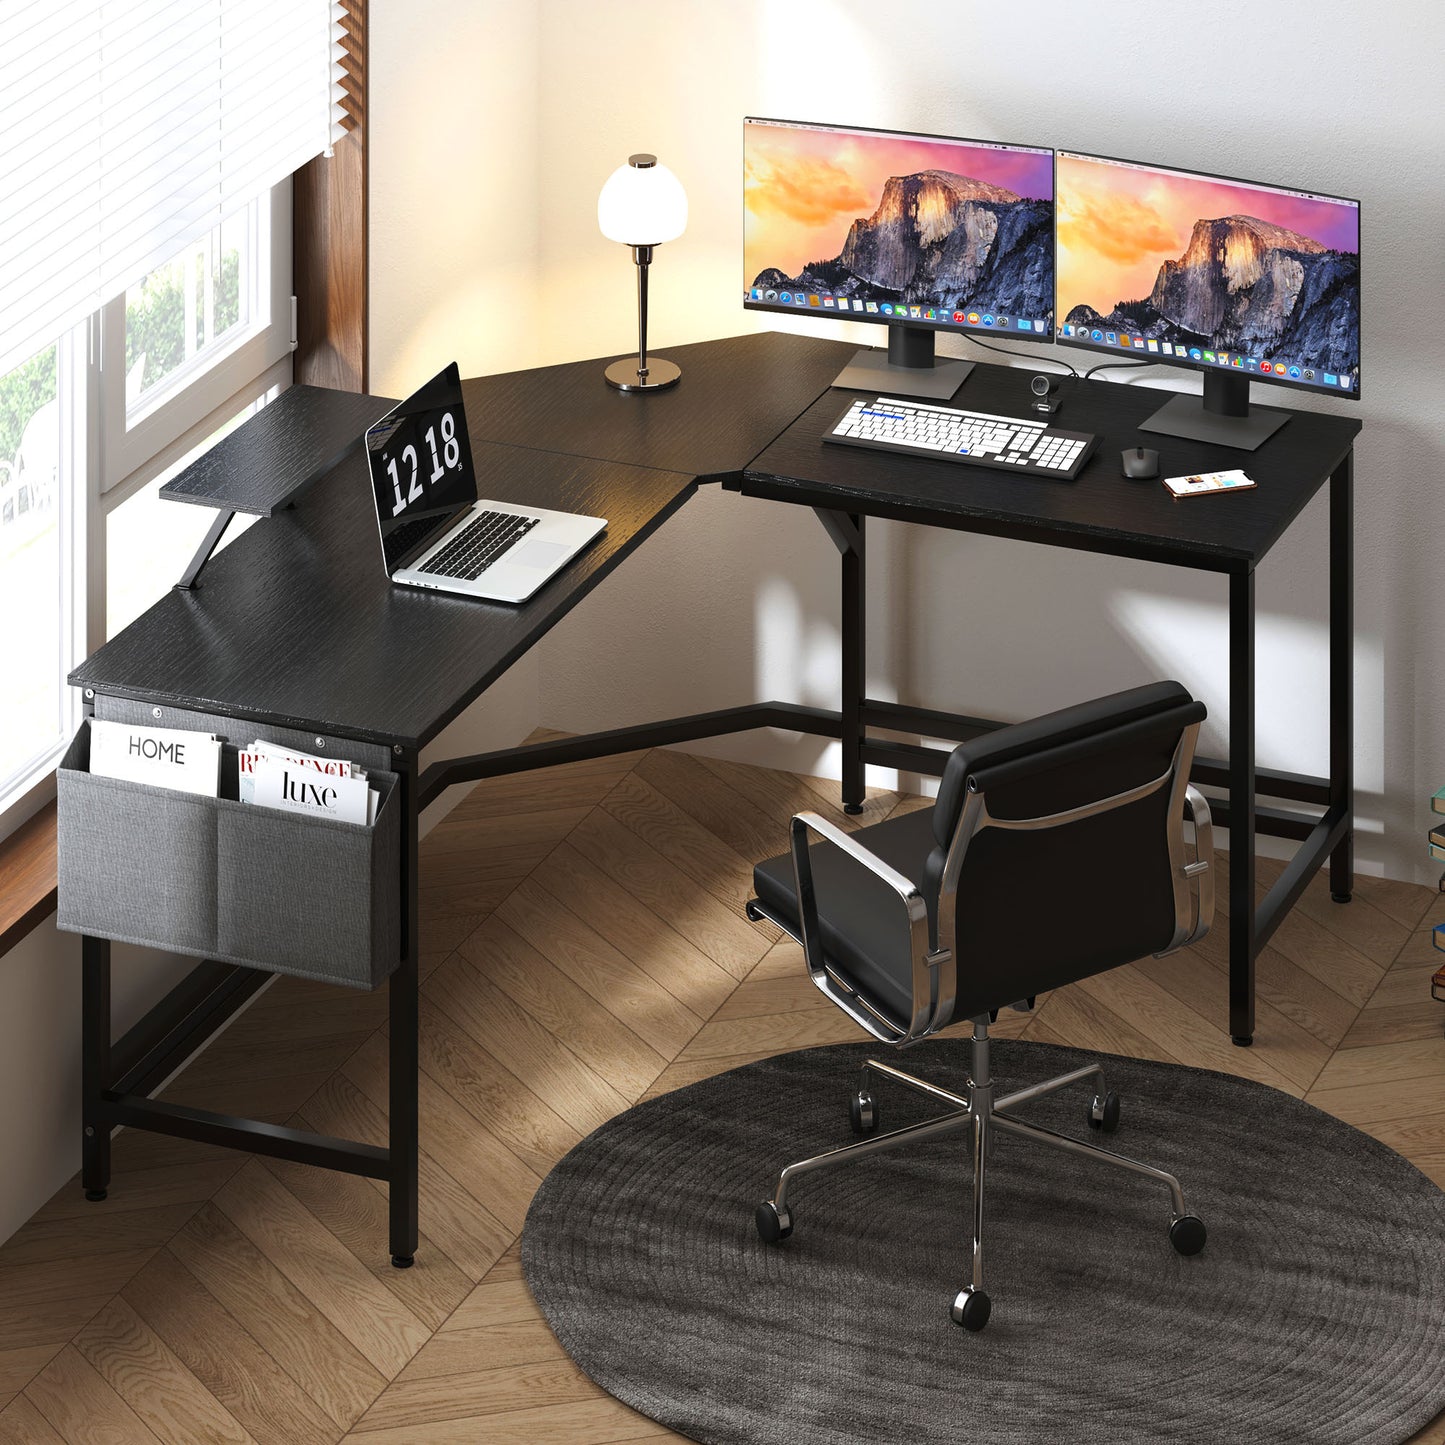 SogesPower 29.5" L-Shaped Computer Desk, Home Office Desk for Corner- Black